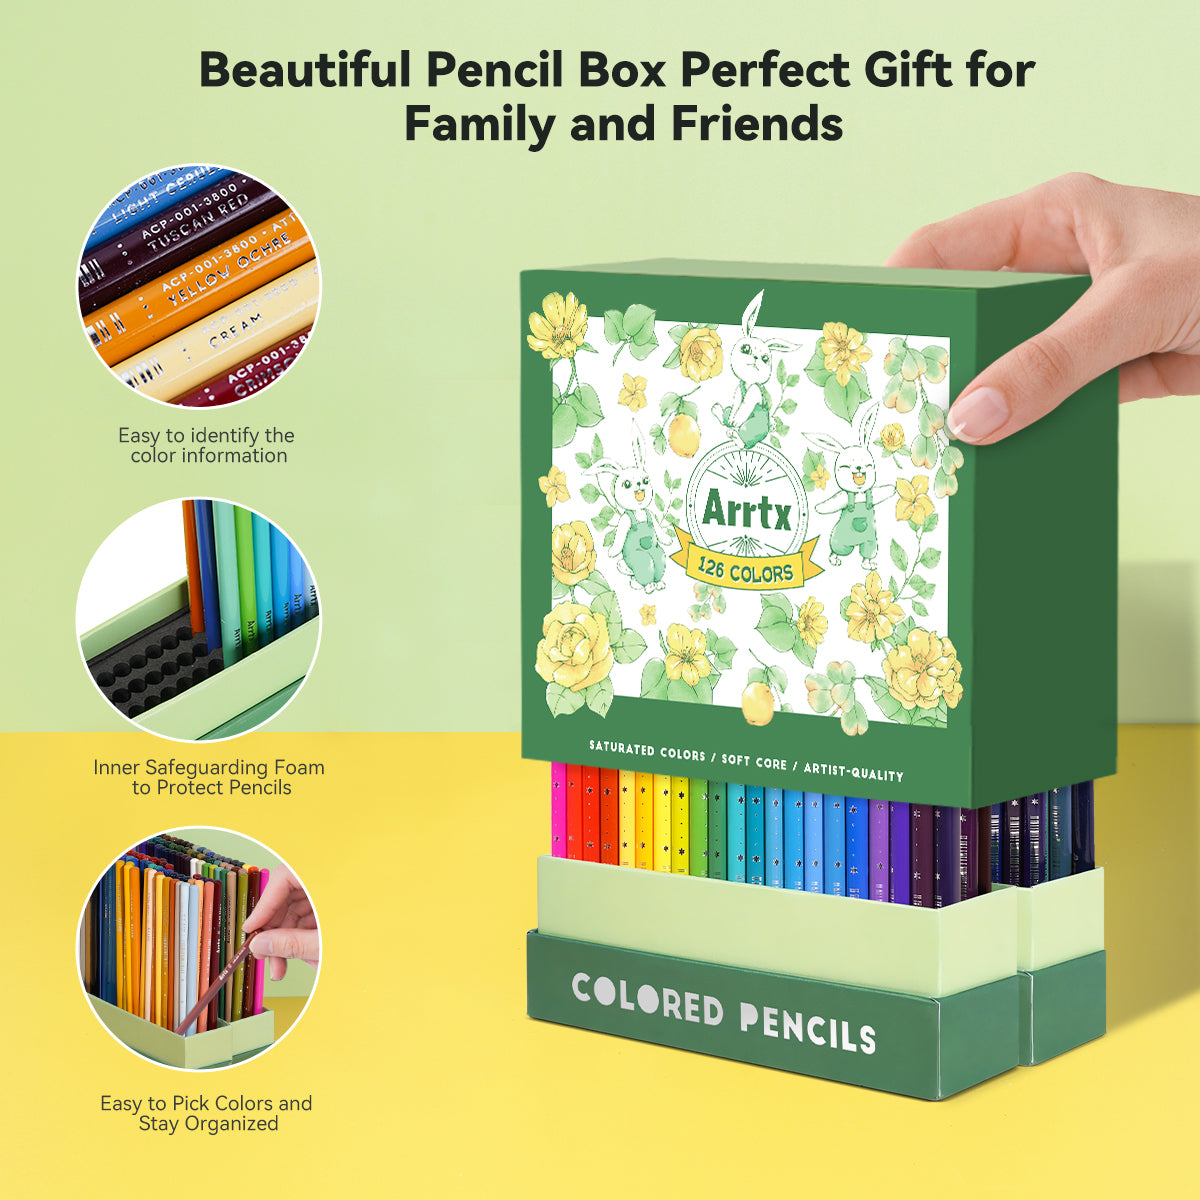 Arrtx 126 Colored Pencils Swatch Template DIY Single Page Color